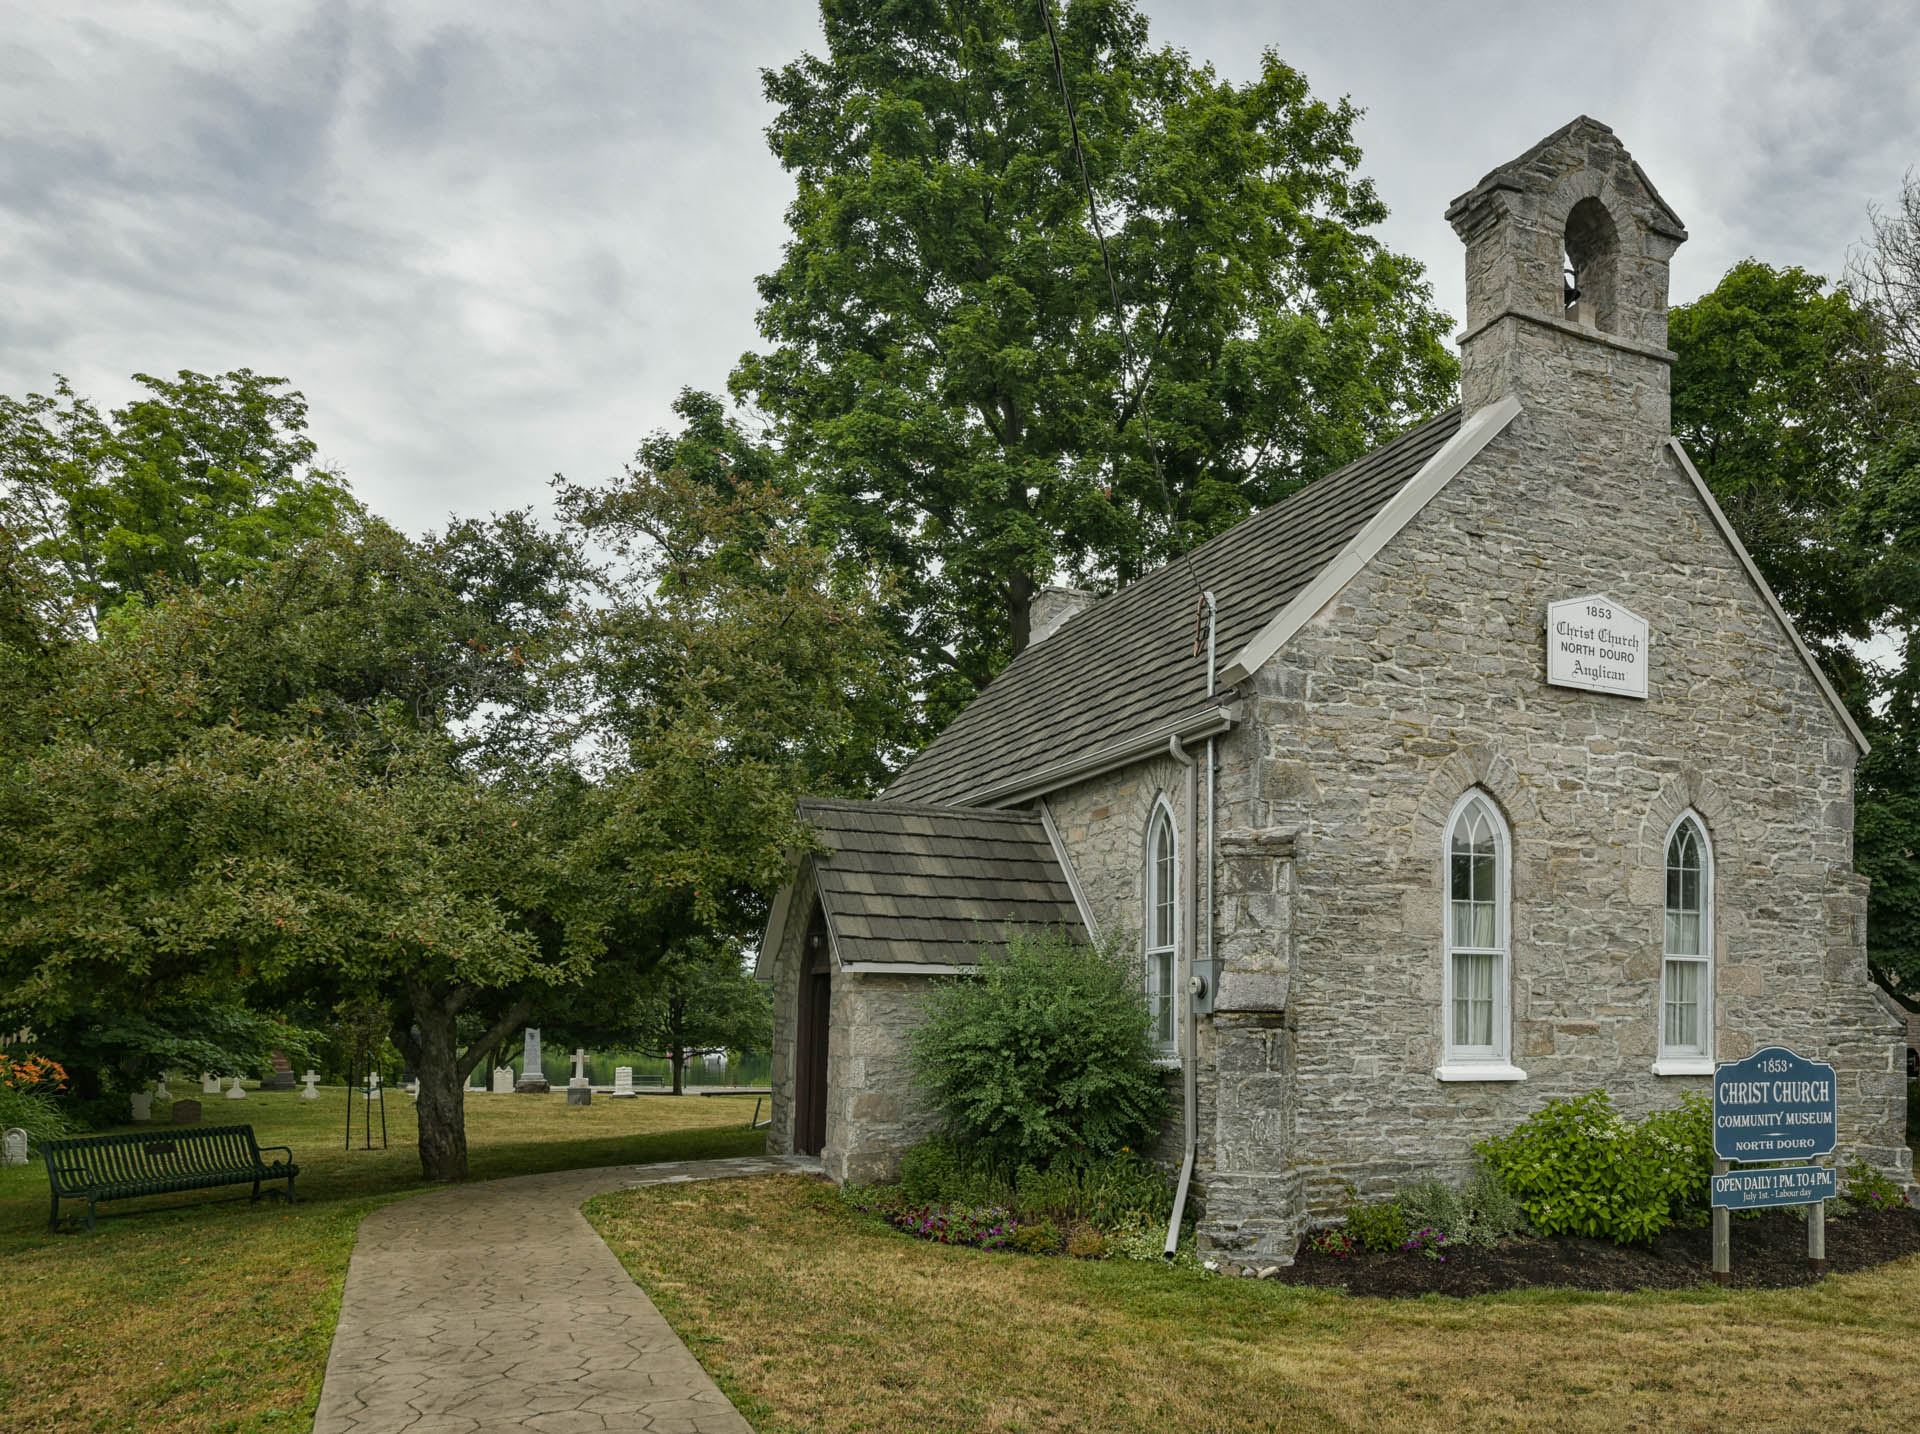 Christ Church Community Museum, 1853, Lakefield